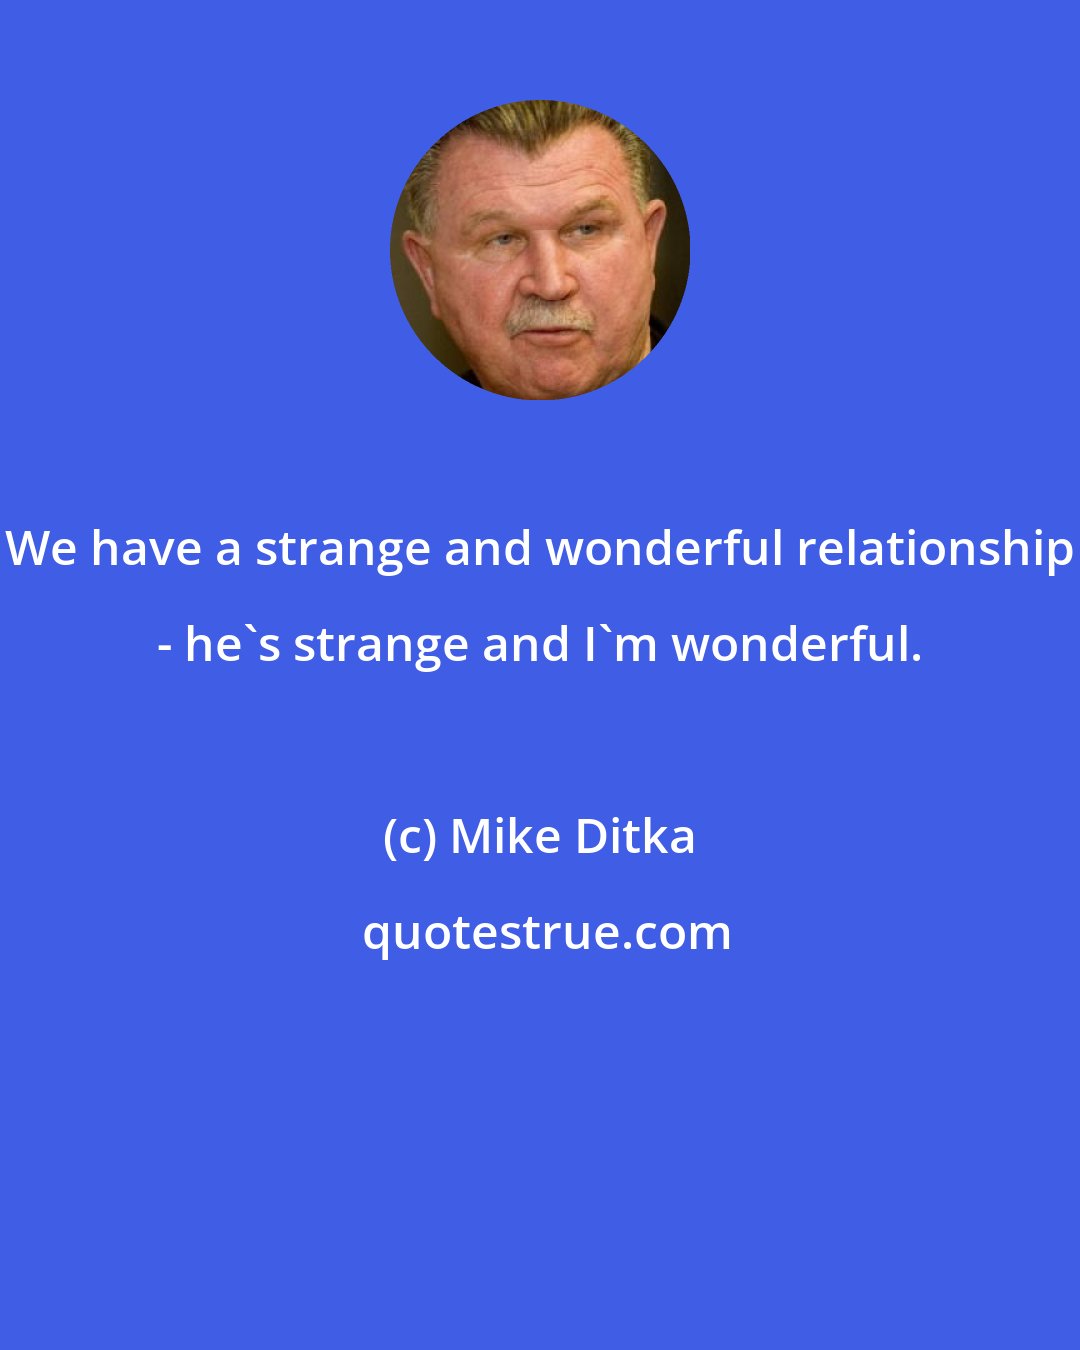 Mike Ditka: We have a strange and wonderful relationship - he's strange and I'm wonderful.